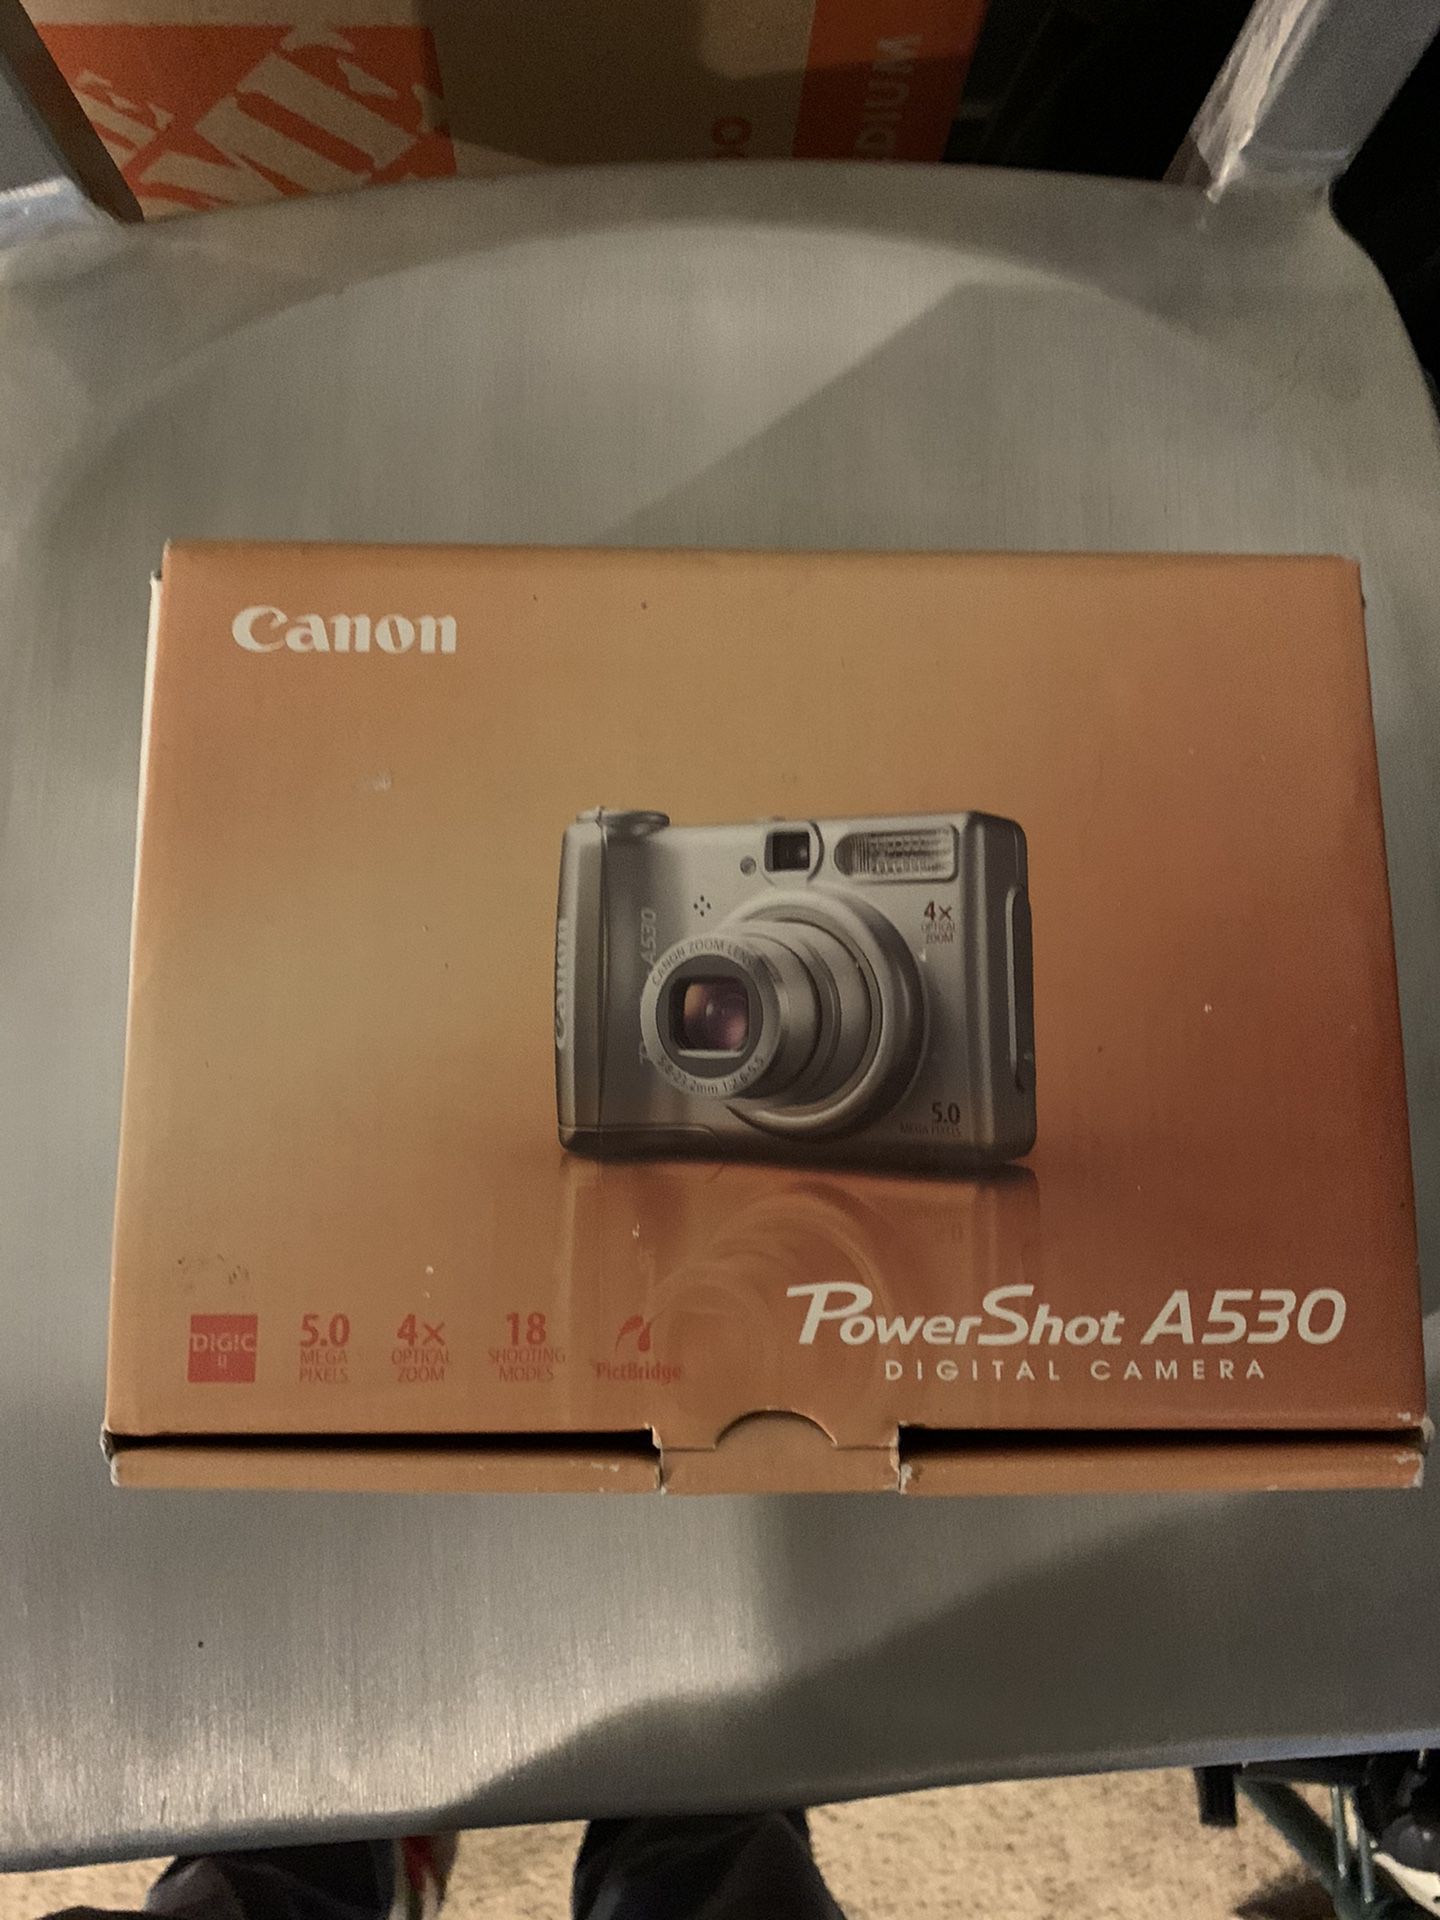 Canon powershot A530 digital camera